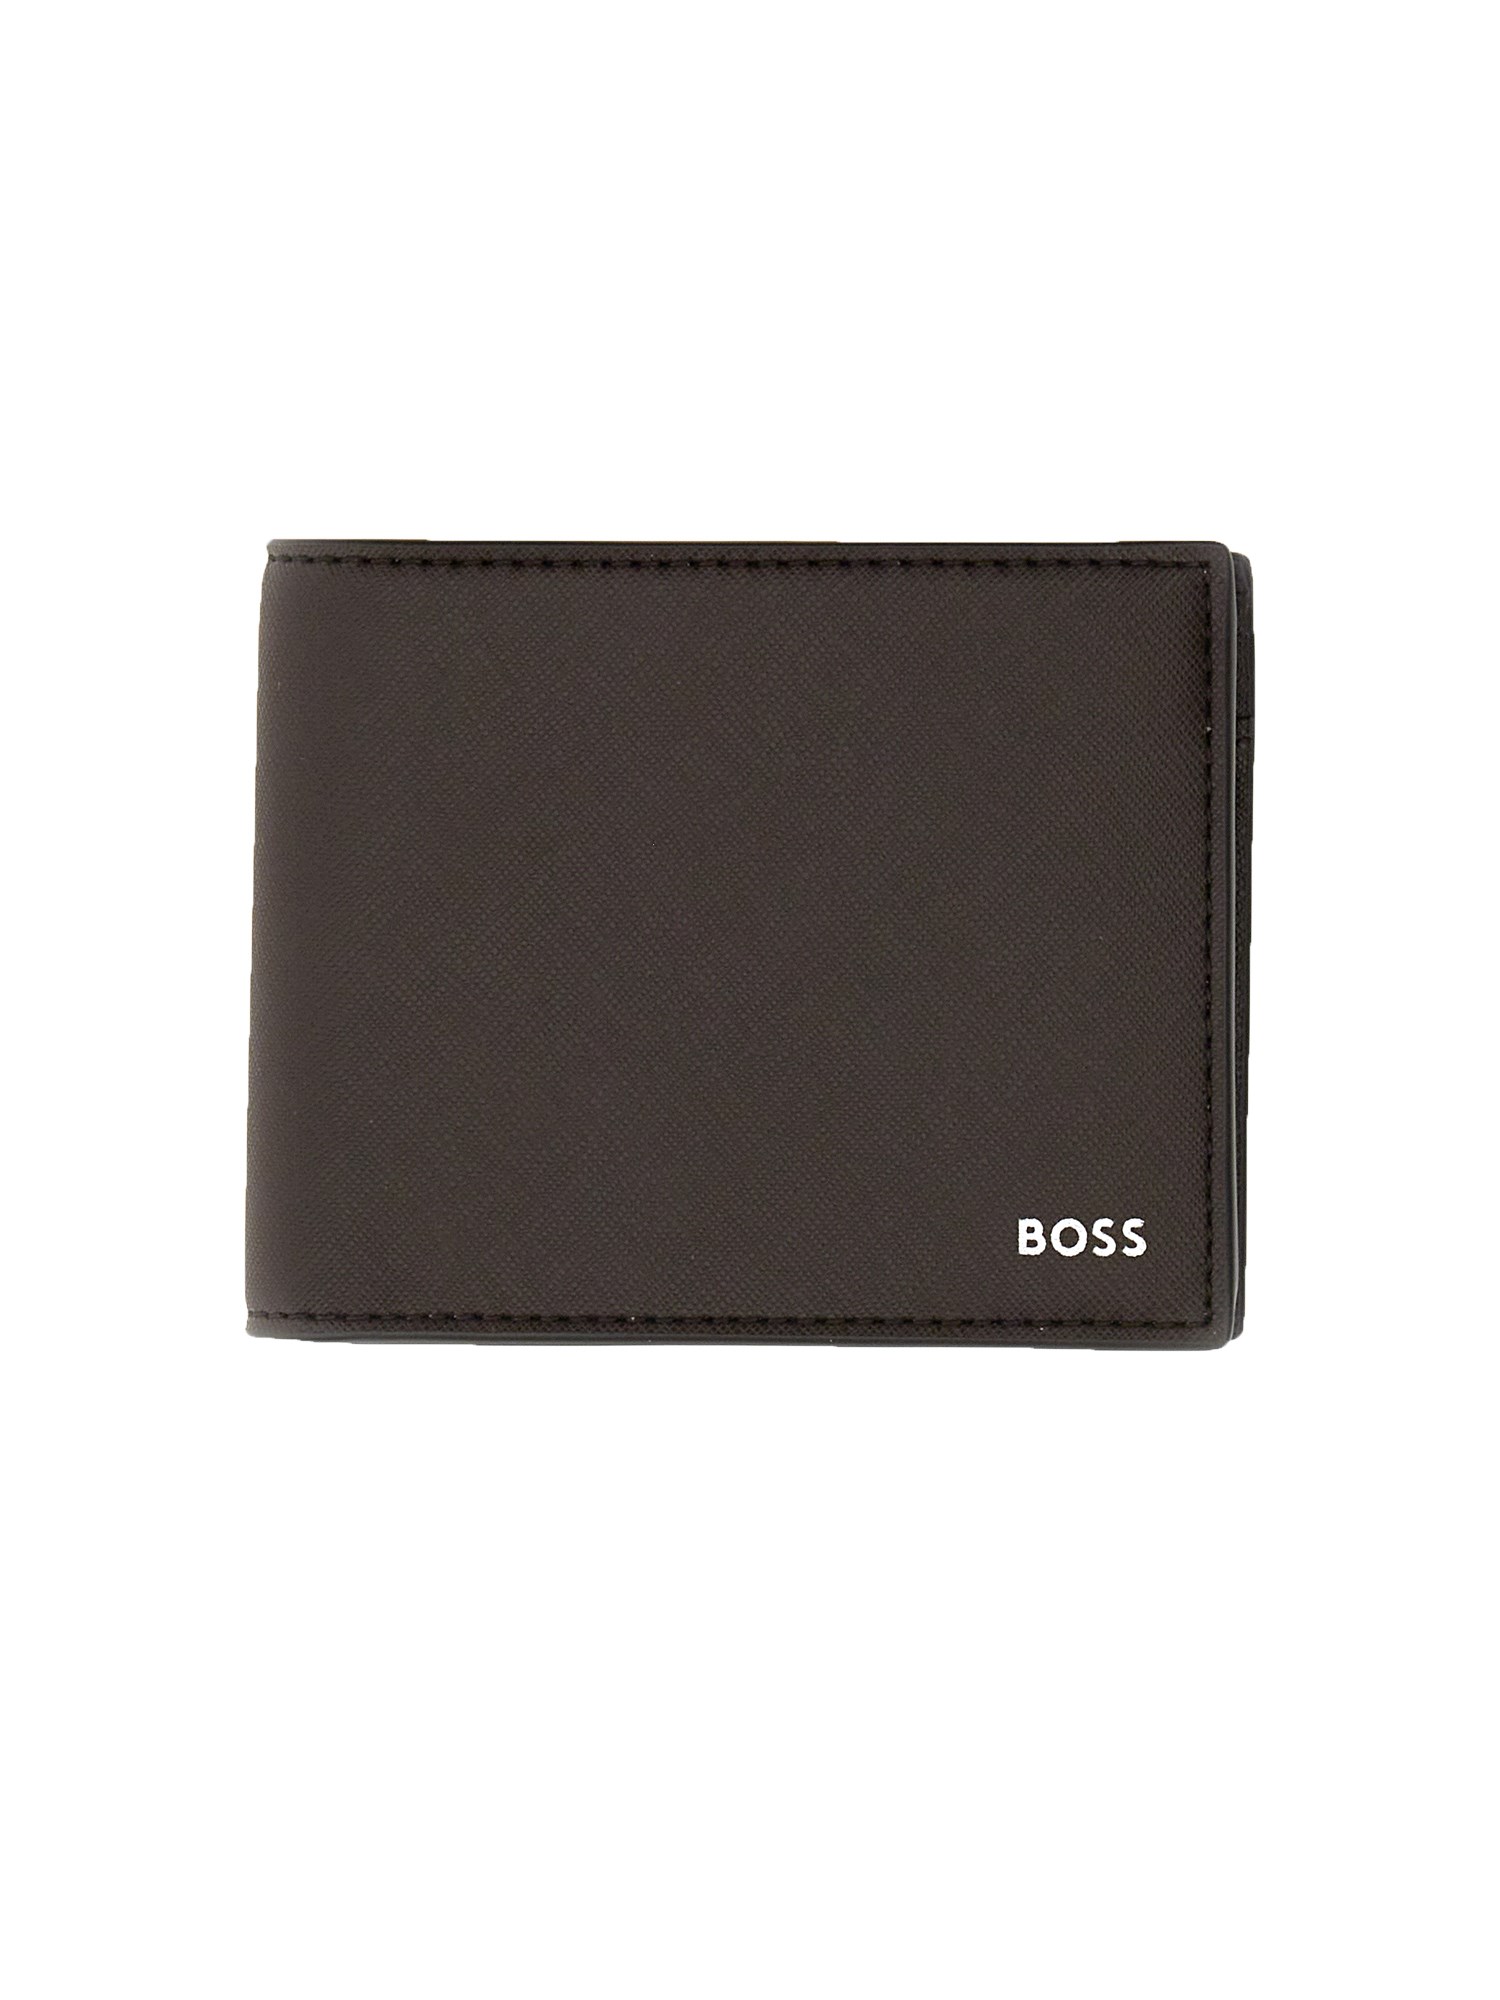 Hugo Boss Zair Wallet In Brown